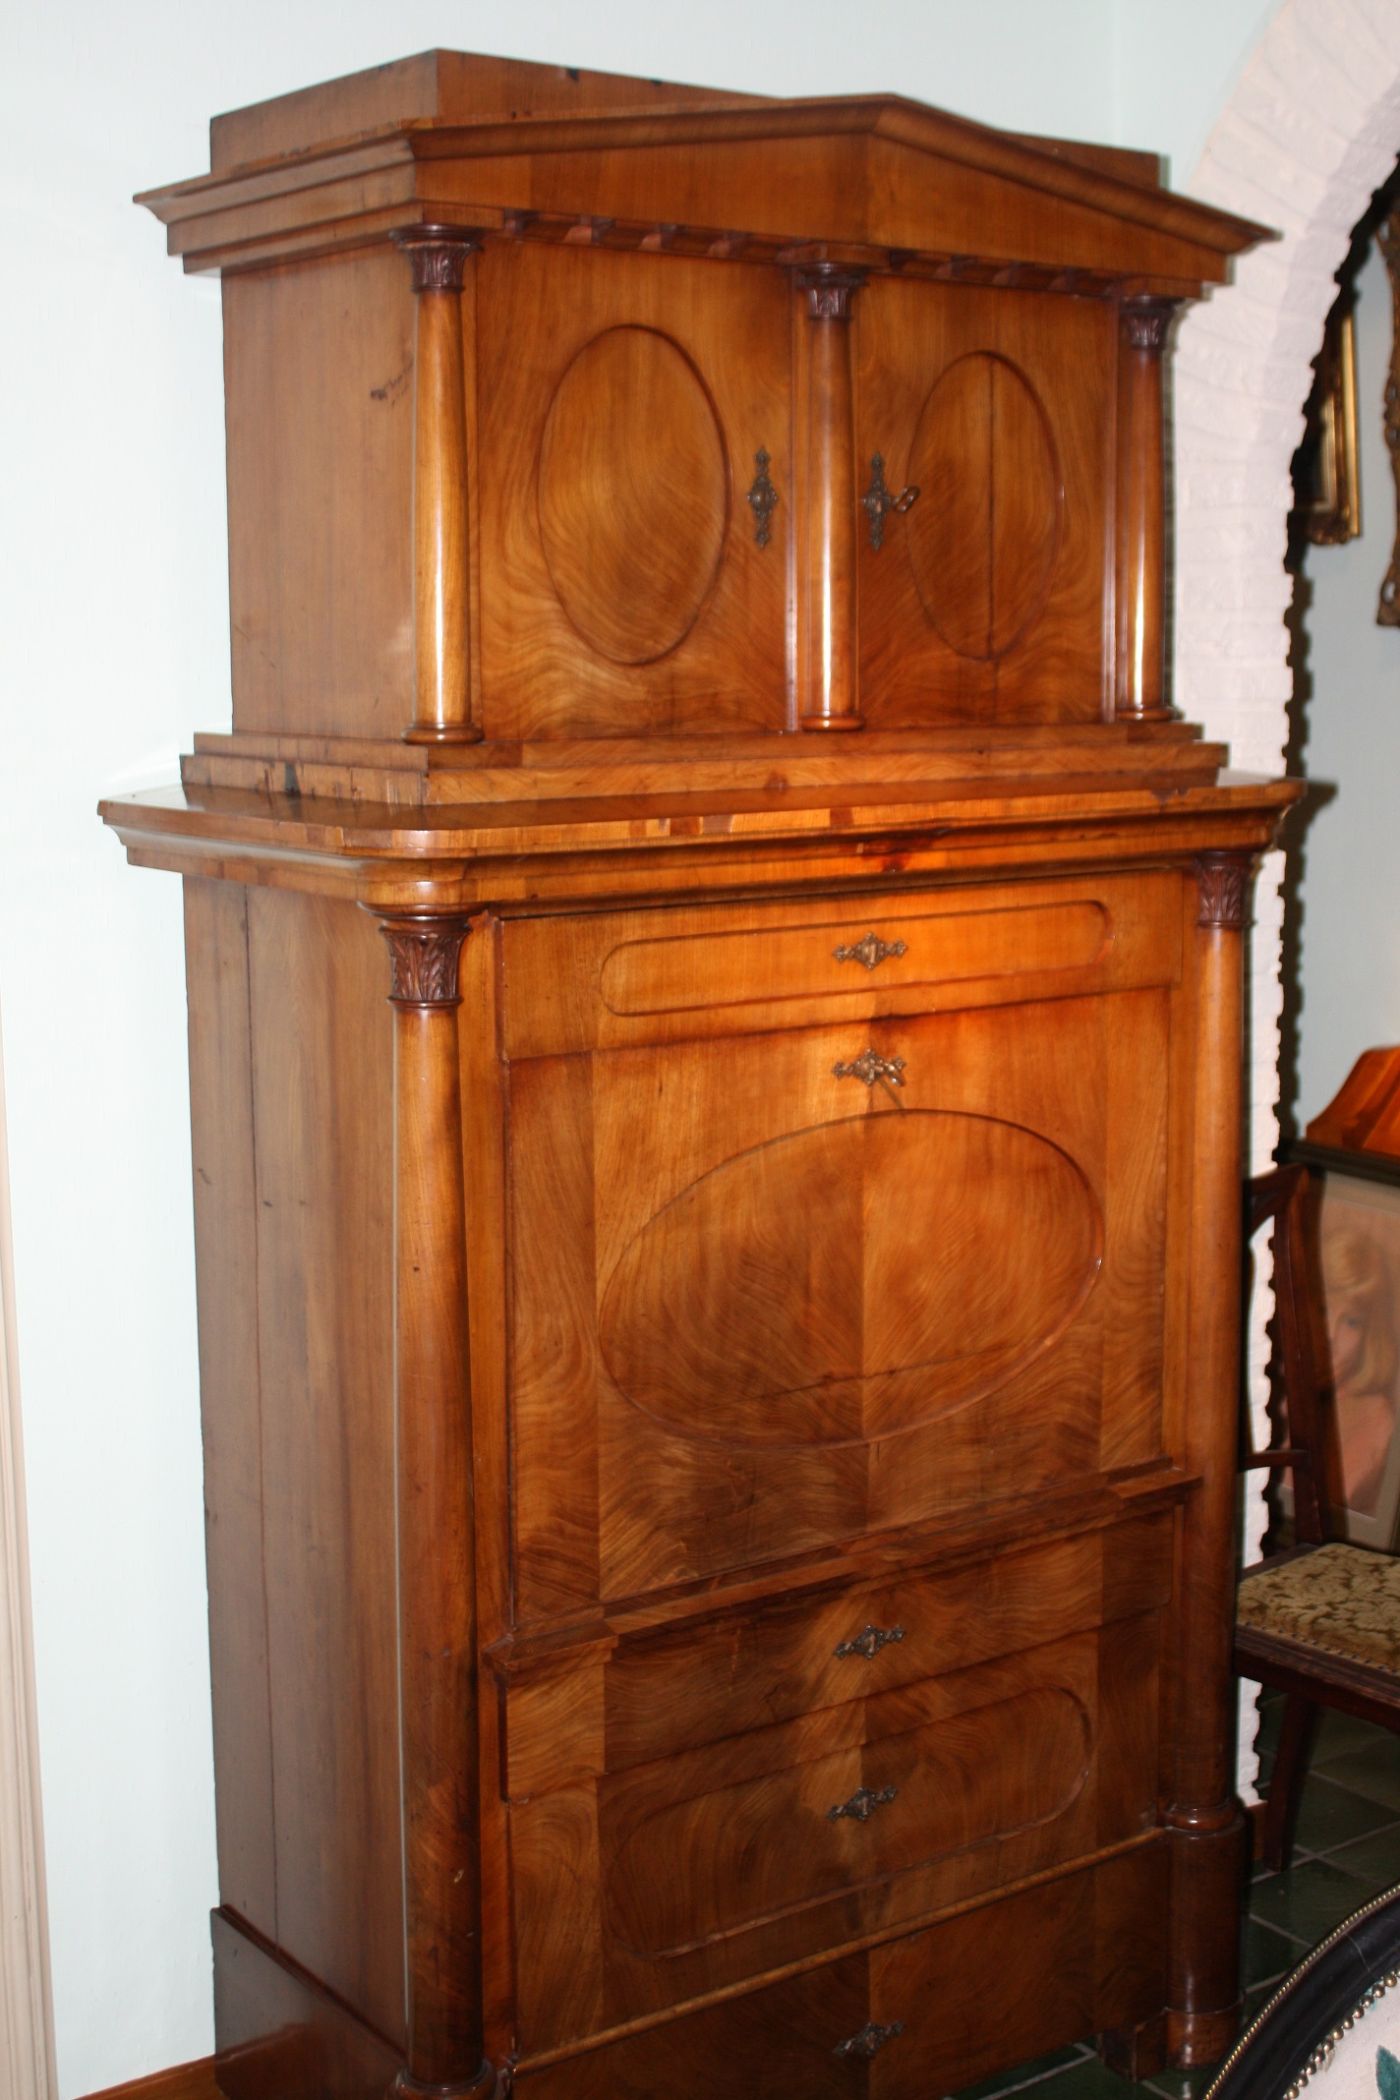 Antique German 1820's Empire style two-part cherry wood veneer bureau secretary desk